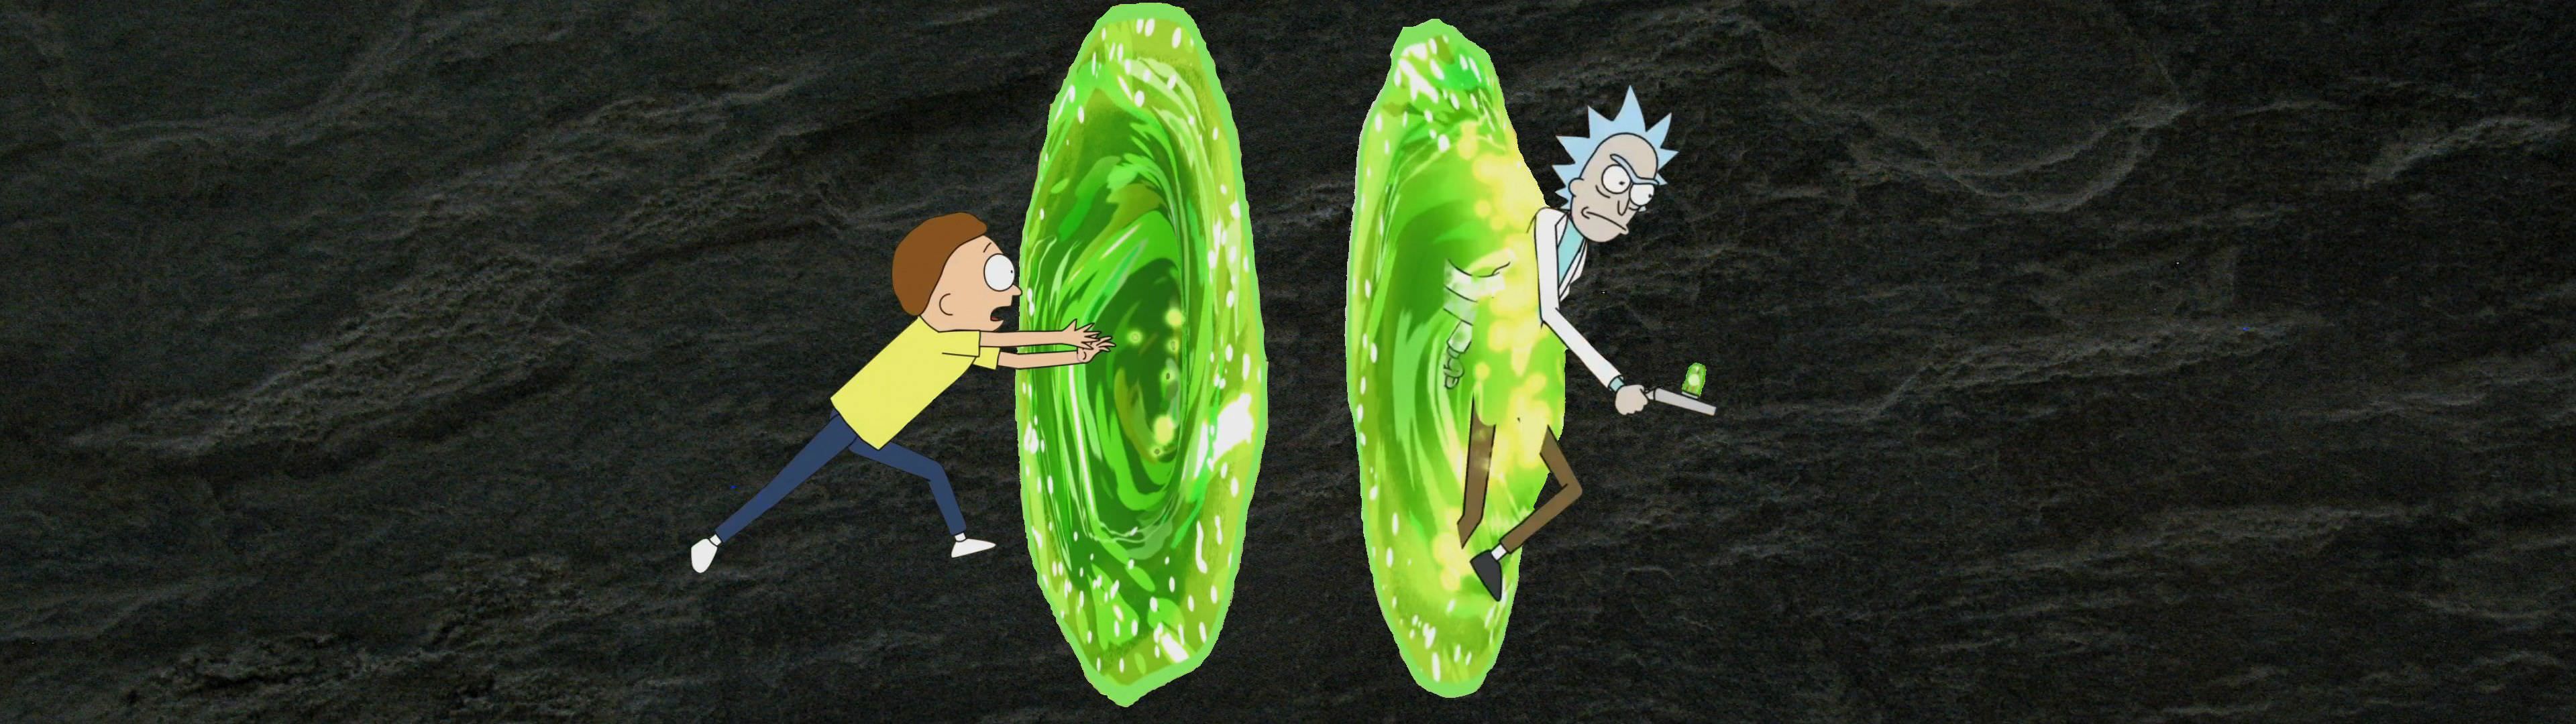 Rick And Morty Portal Wallpapers